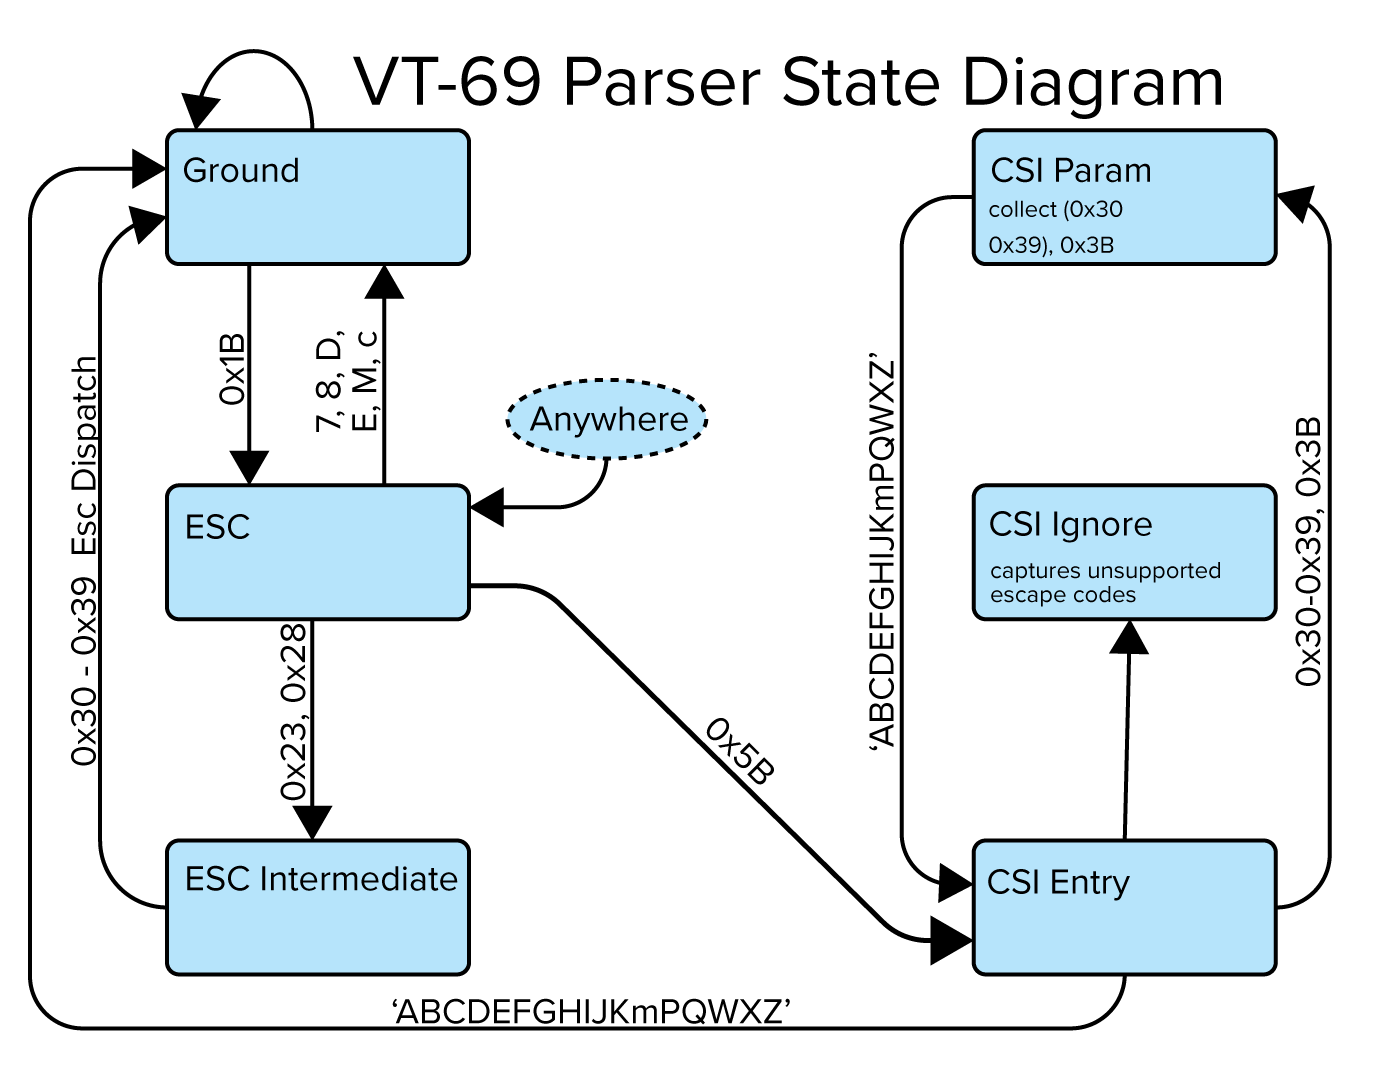 State Diagram of parser